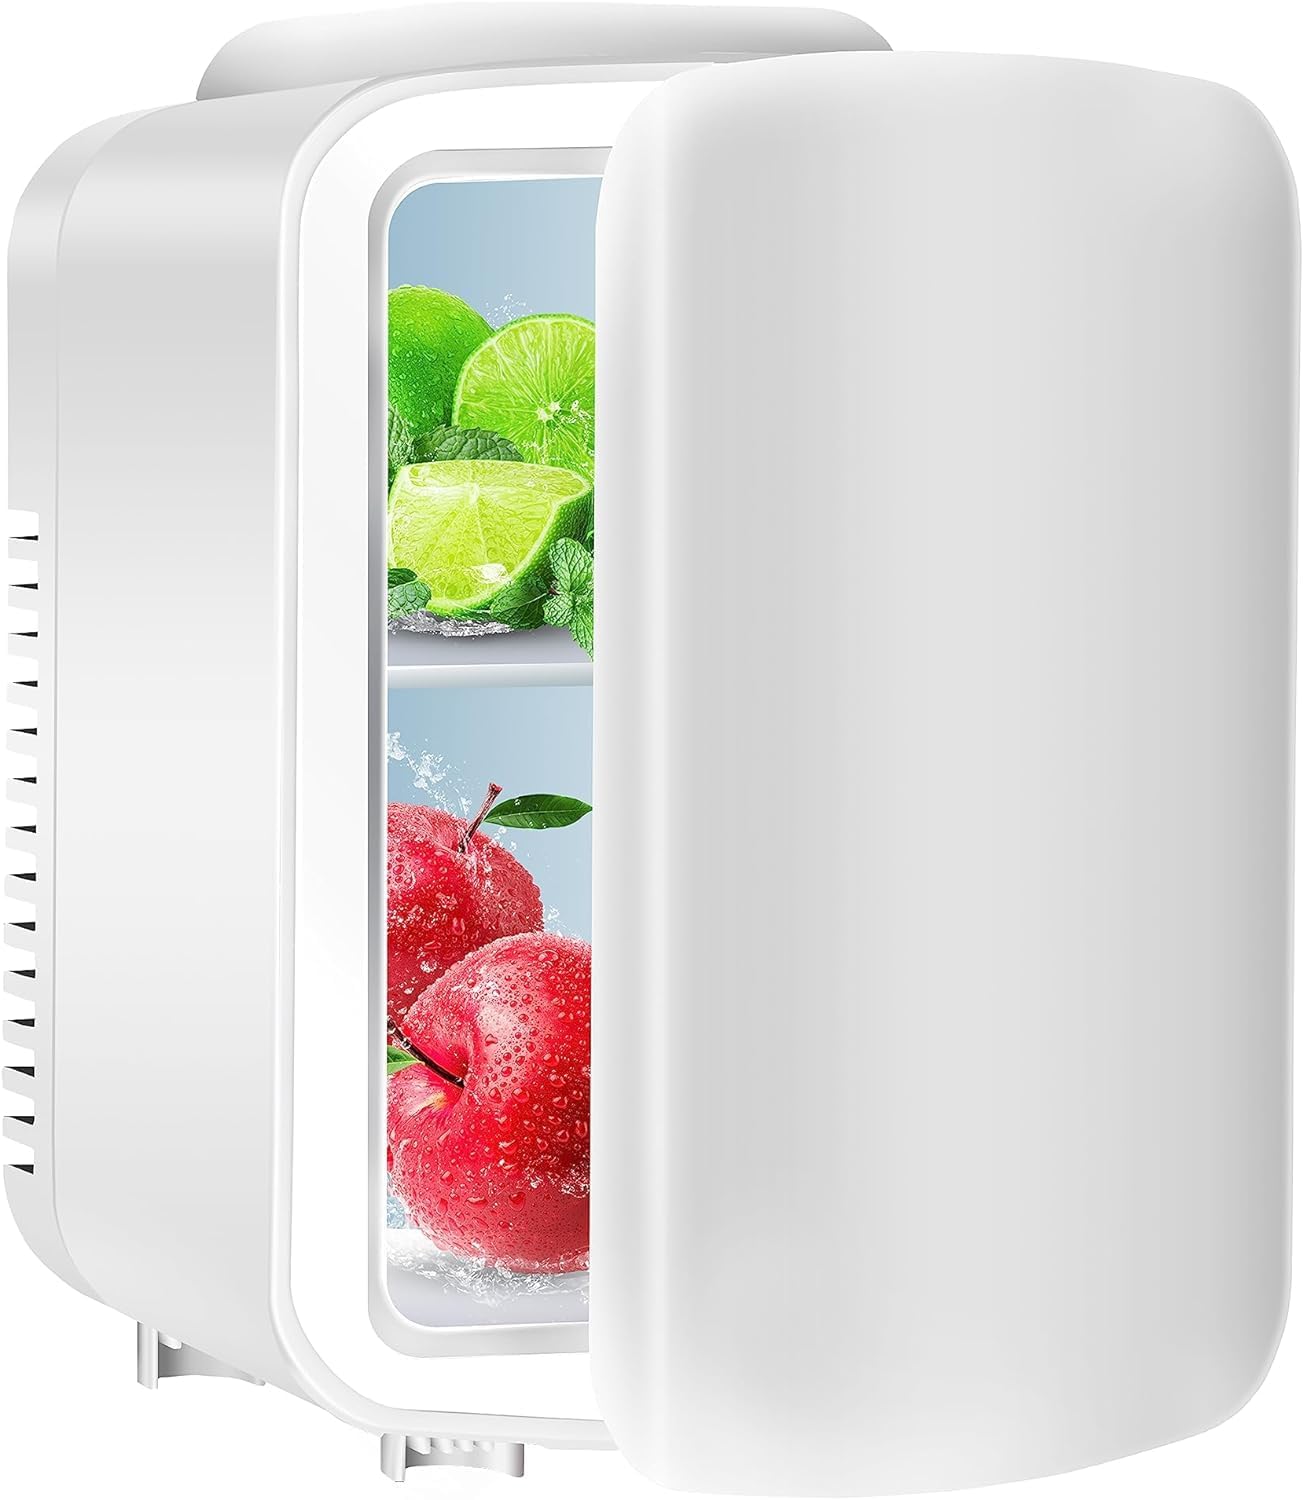 Simplelux Mini refrigerator White